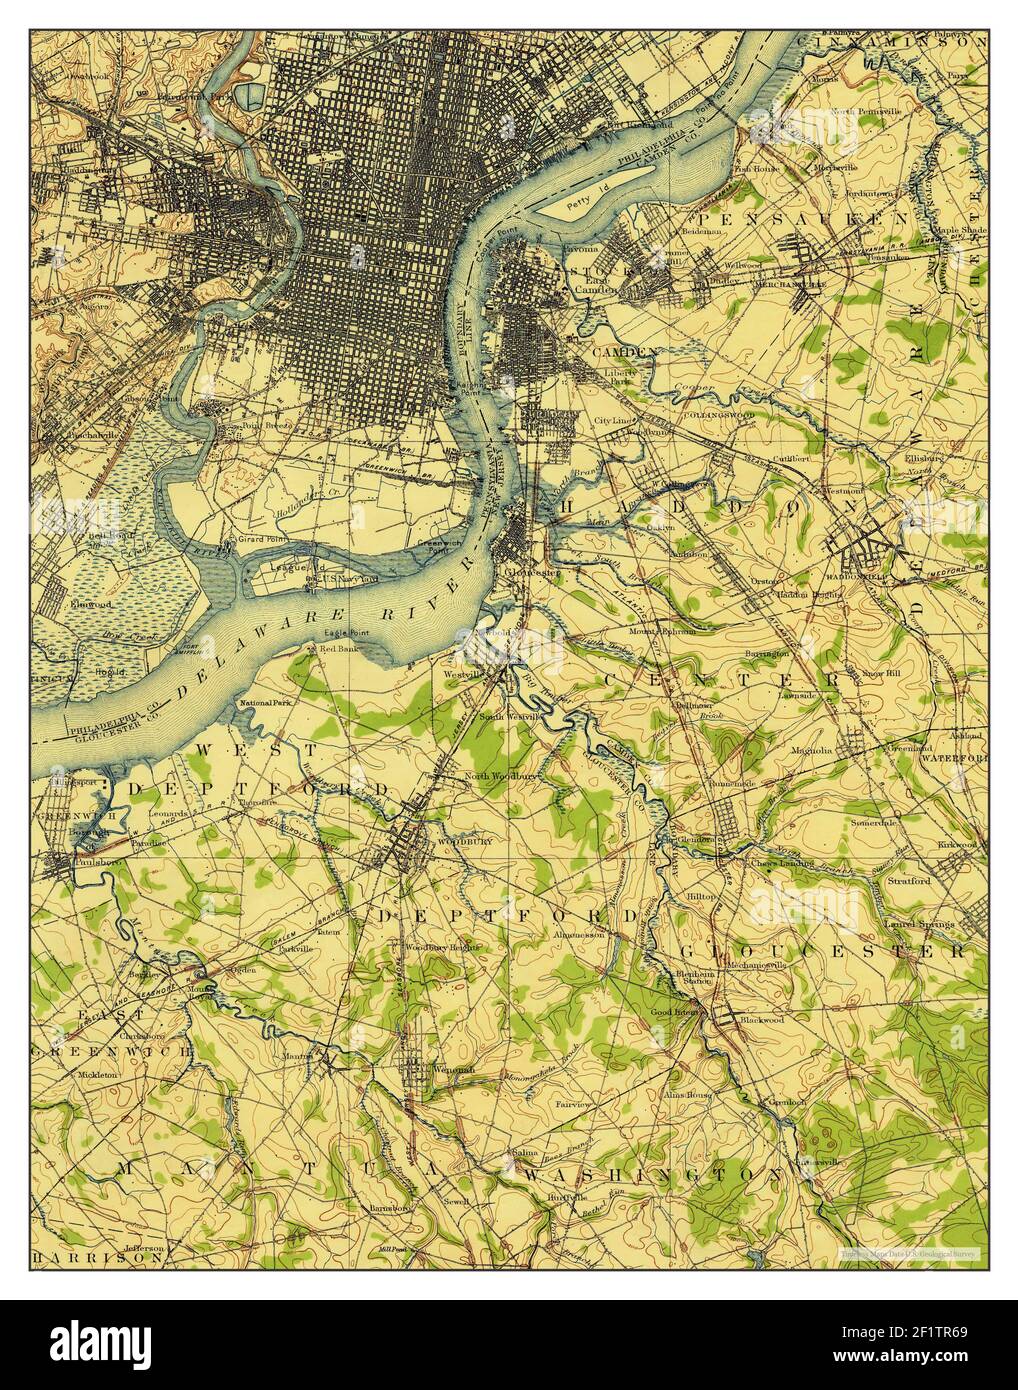 Philadelphia, Pennsylvania, map 1920, 1:62500, United States of America by Timeless Maps, data U.S. Geological Survey Stock Photo